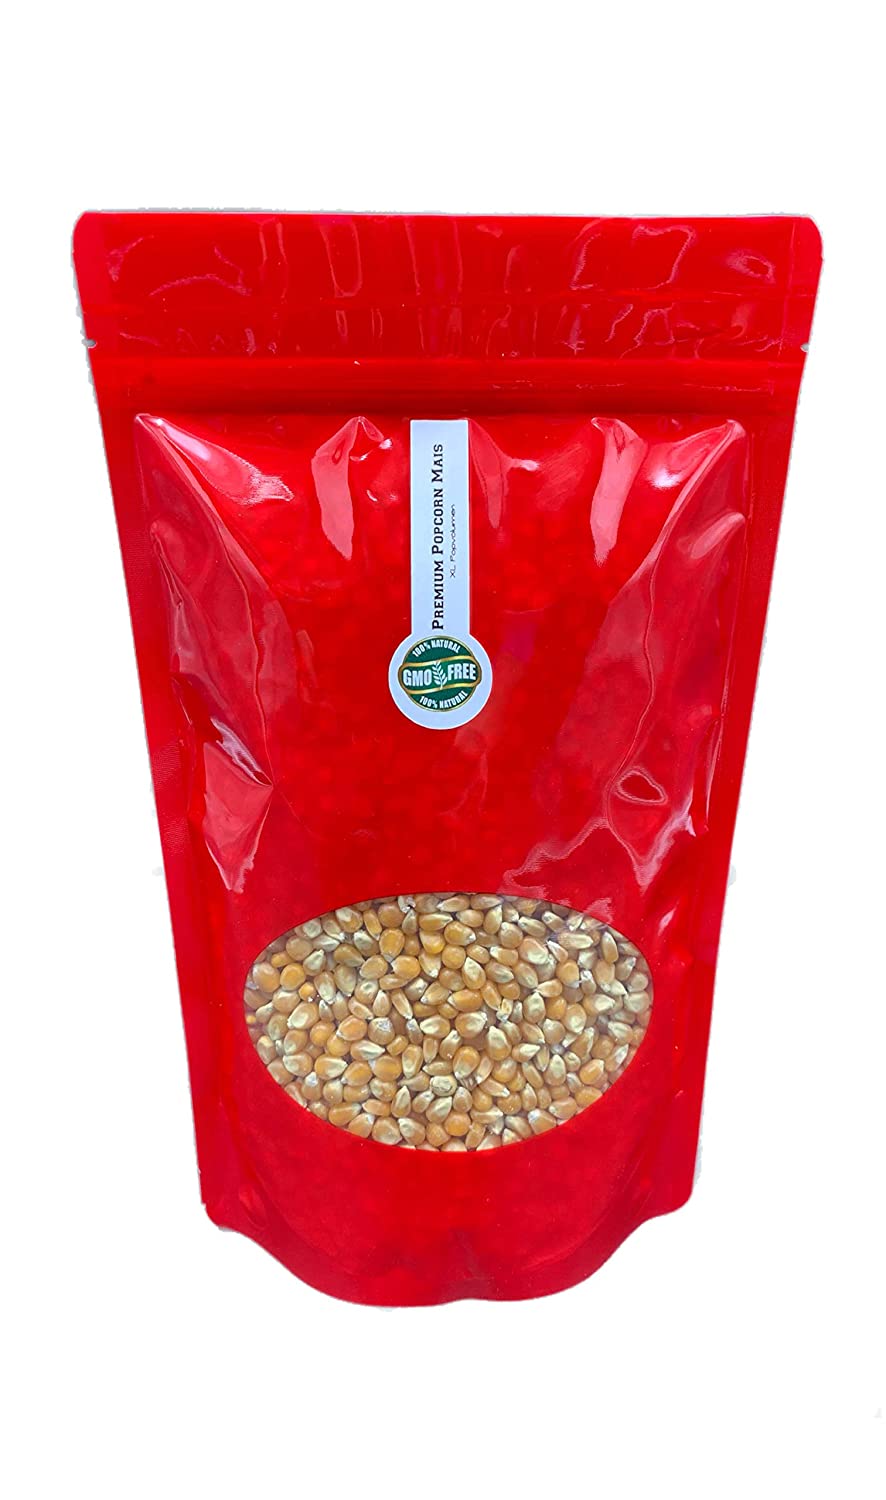 3kg Mushroom Popcornmais ,Popcorn Mais für Popcornmaschine & Pfanne 5,66€/kg 